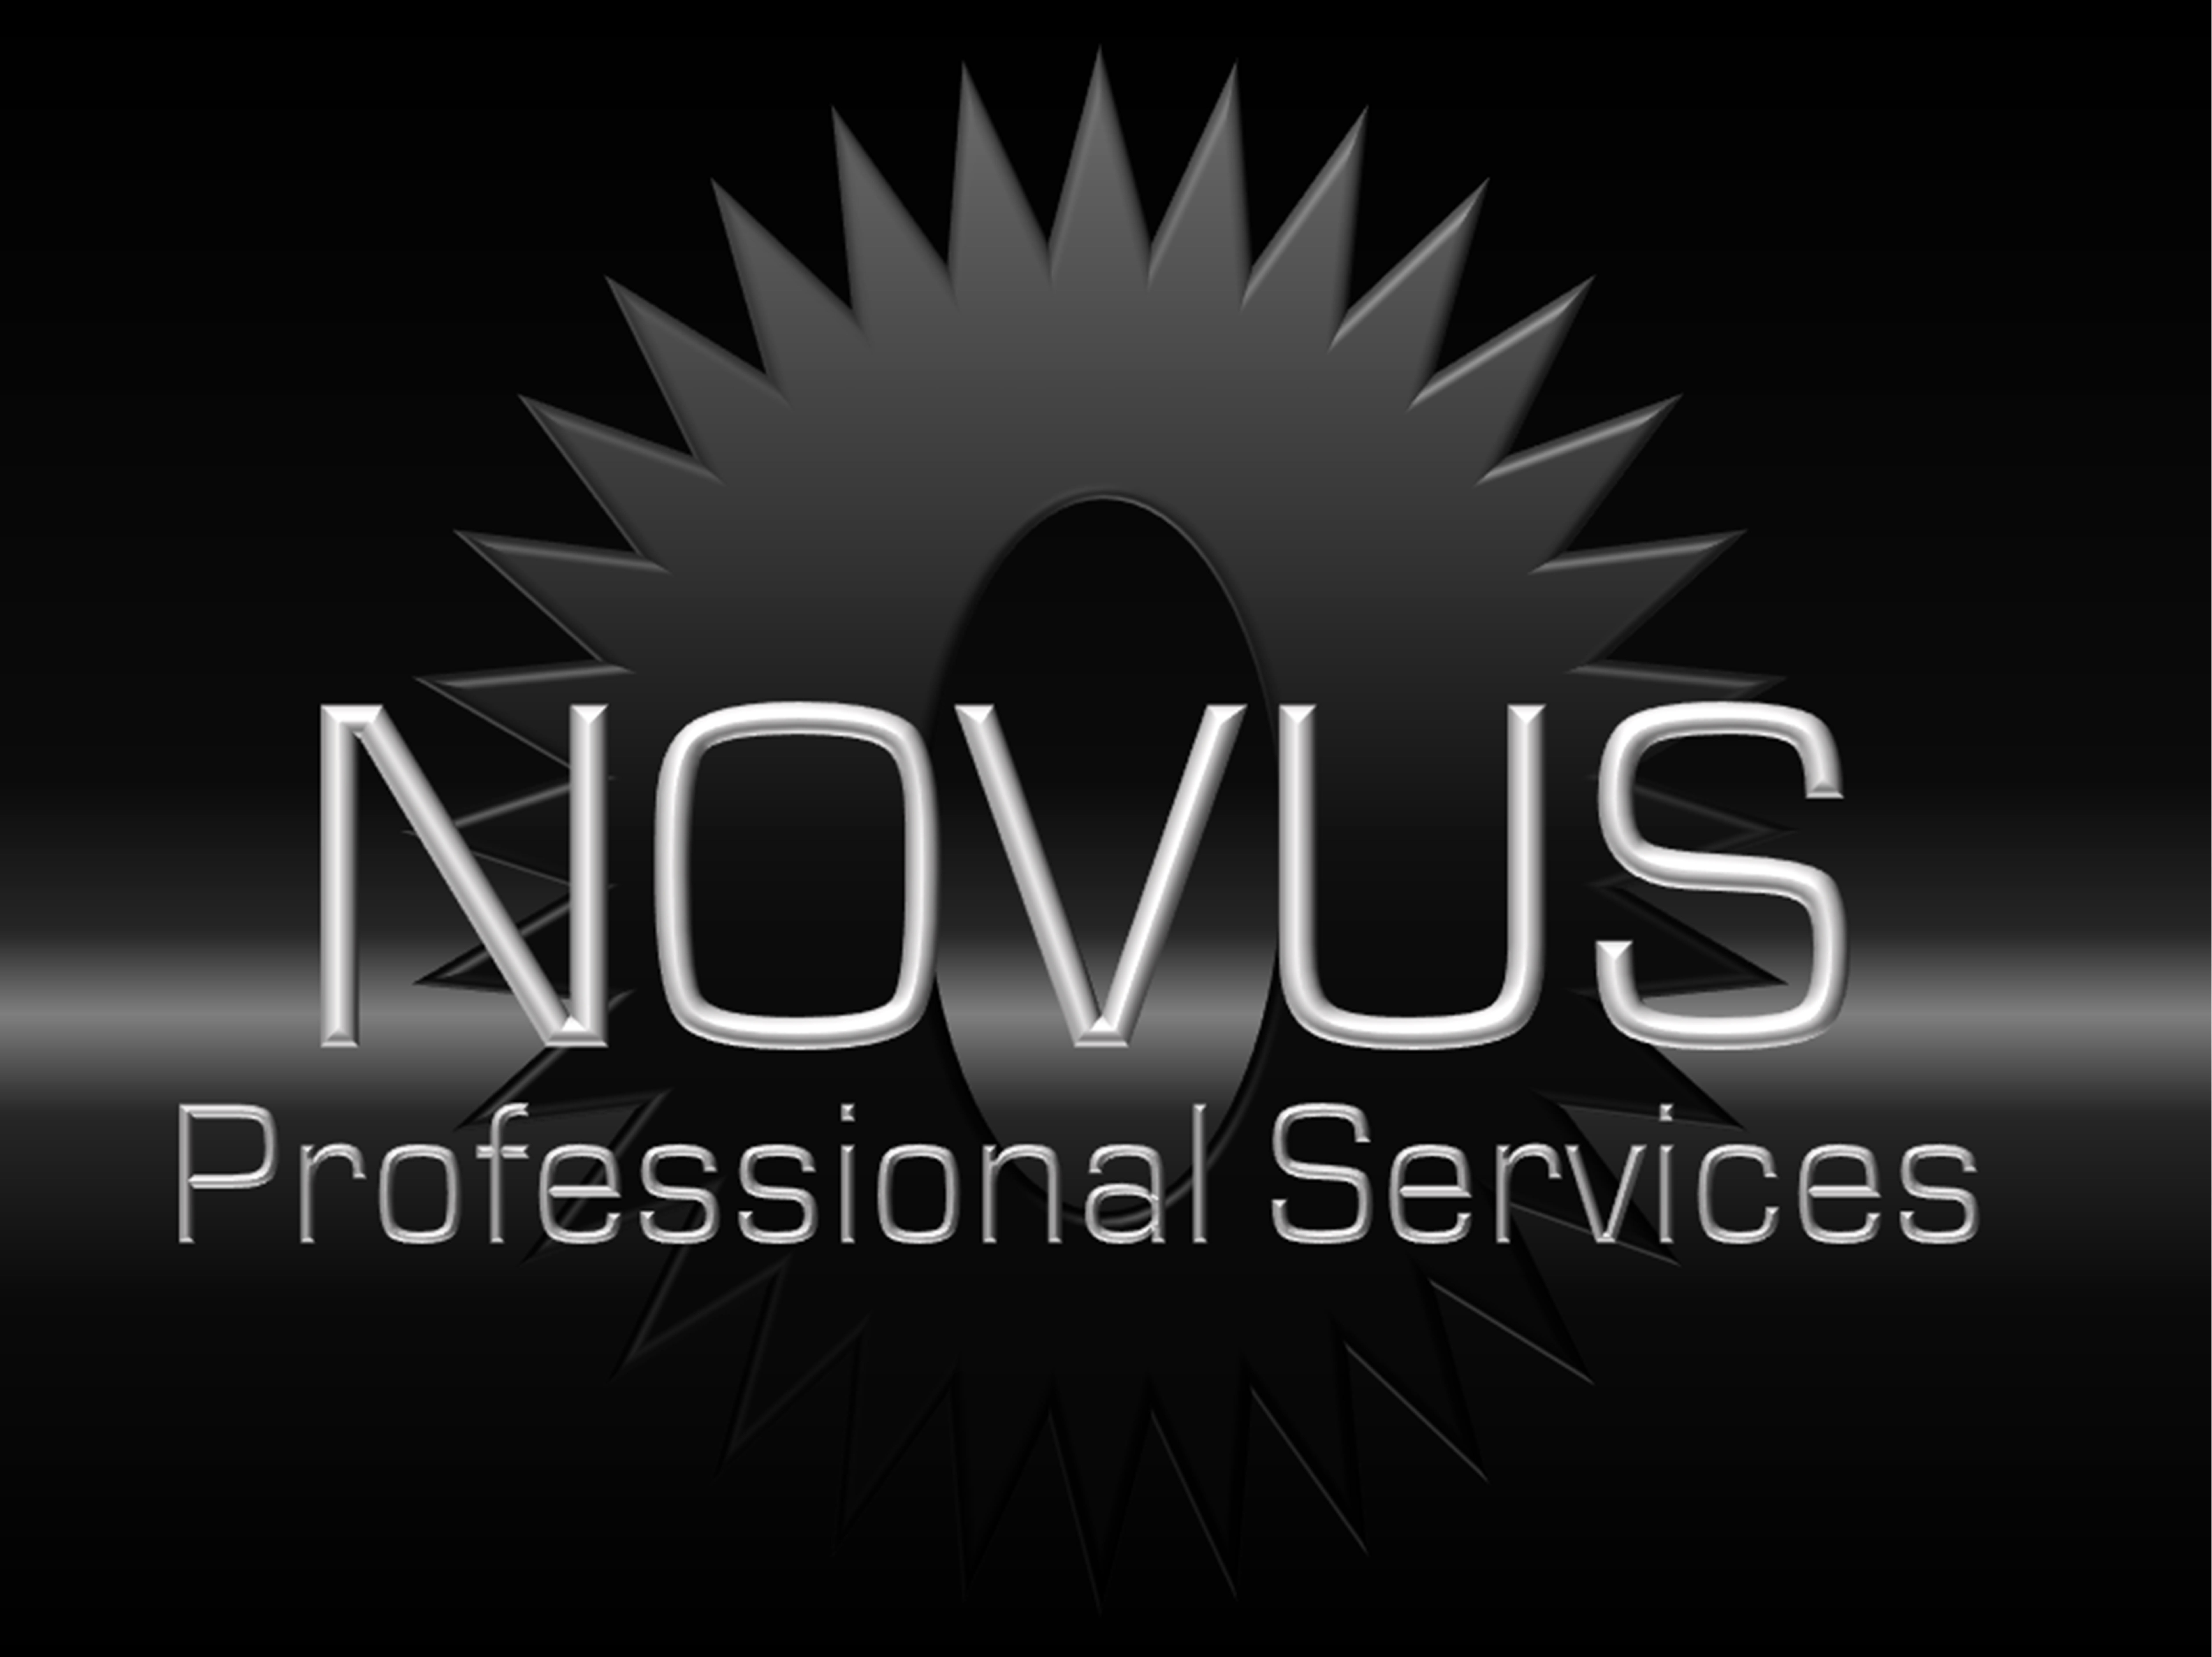 Novus Professional Services